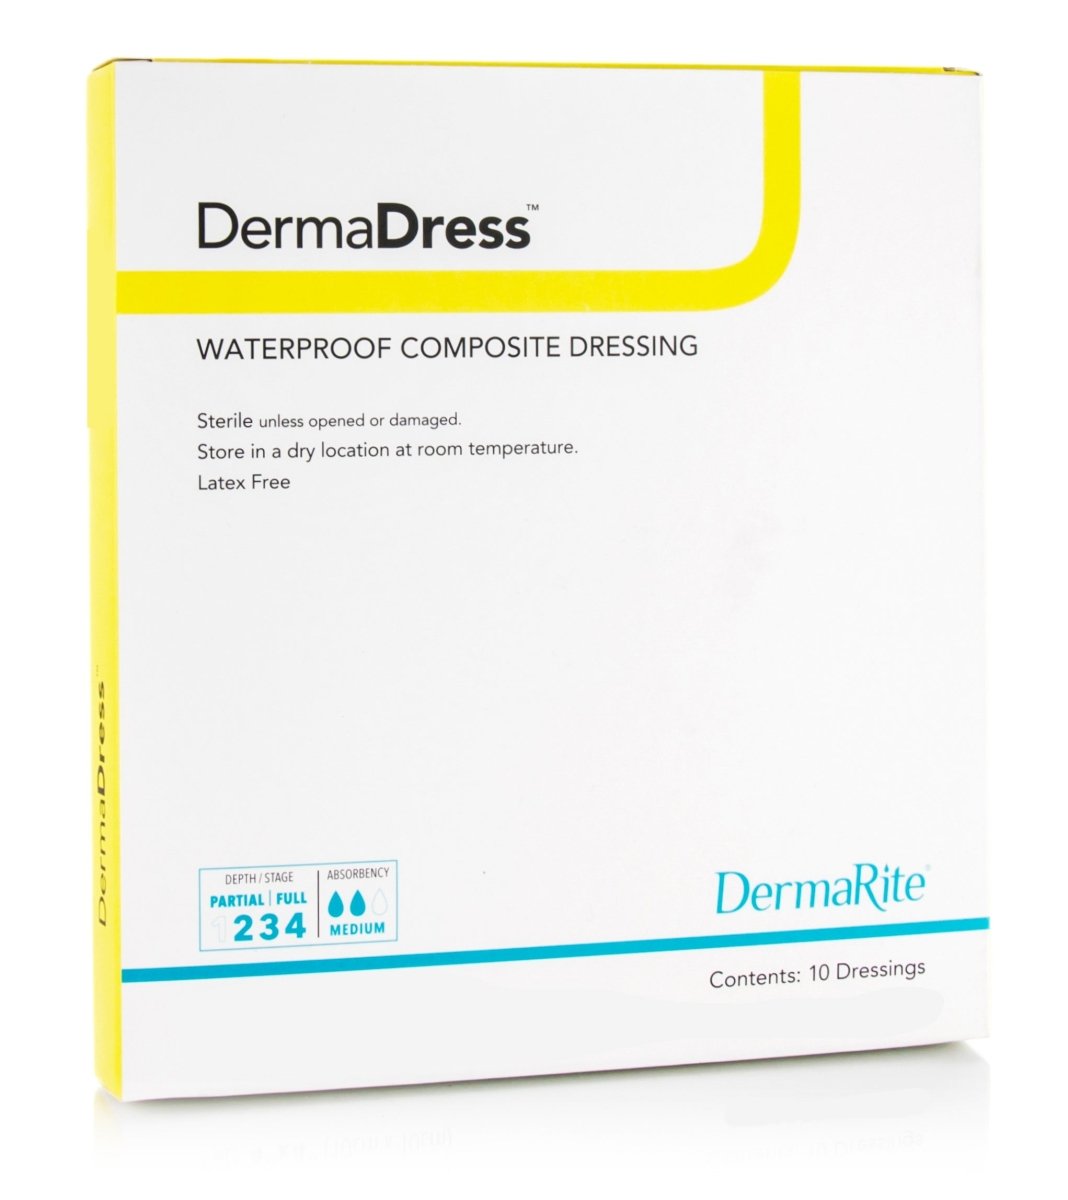 DermaDress Composite Dressing, 4 x 10 Inch - 946679_BX - 1